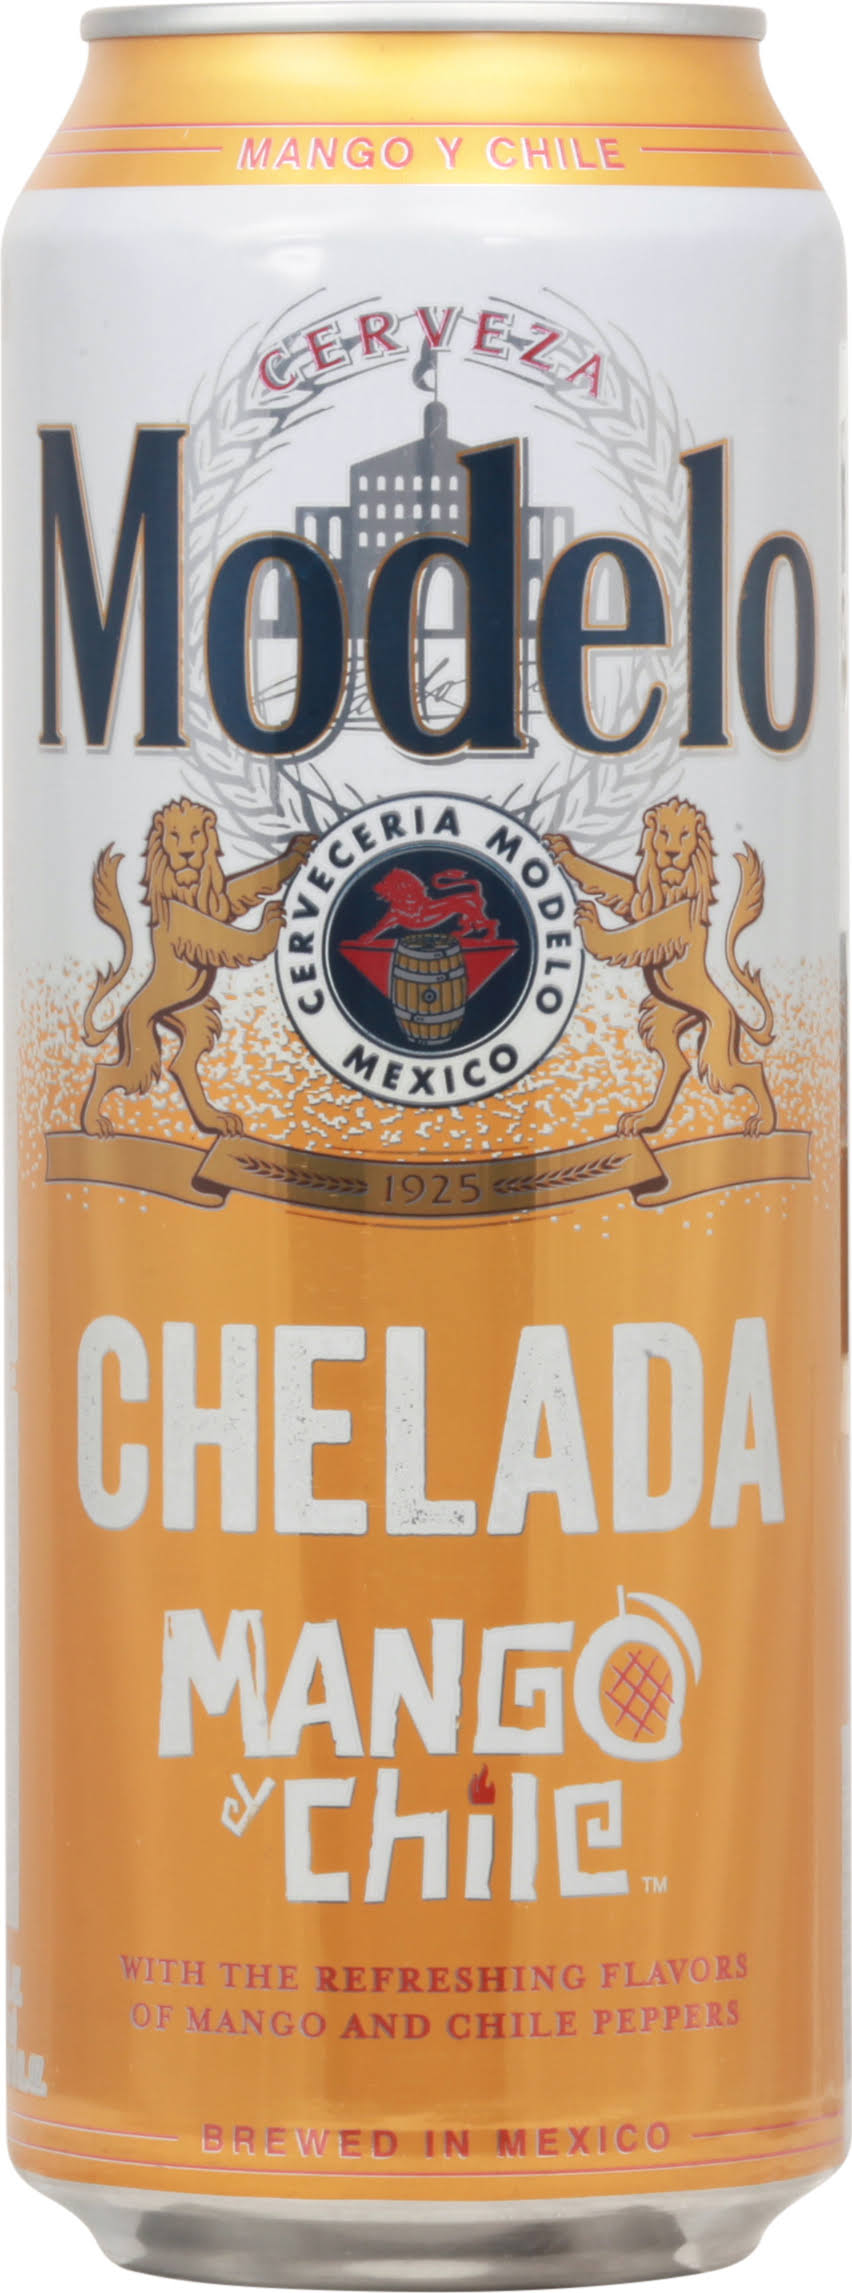 Modelo Beer, Chelada, Mango Chile - 24 fl oz